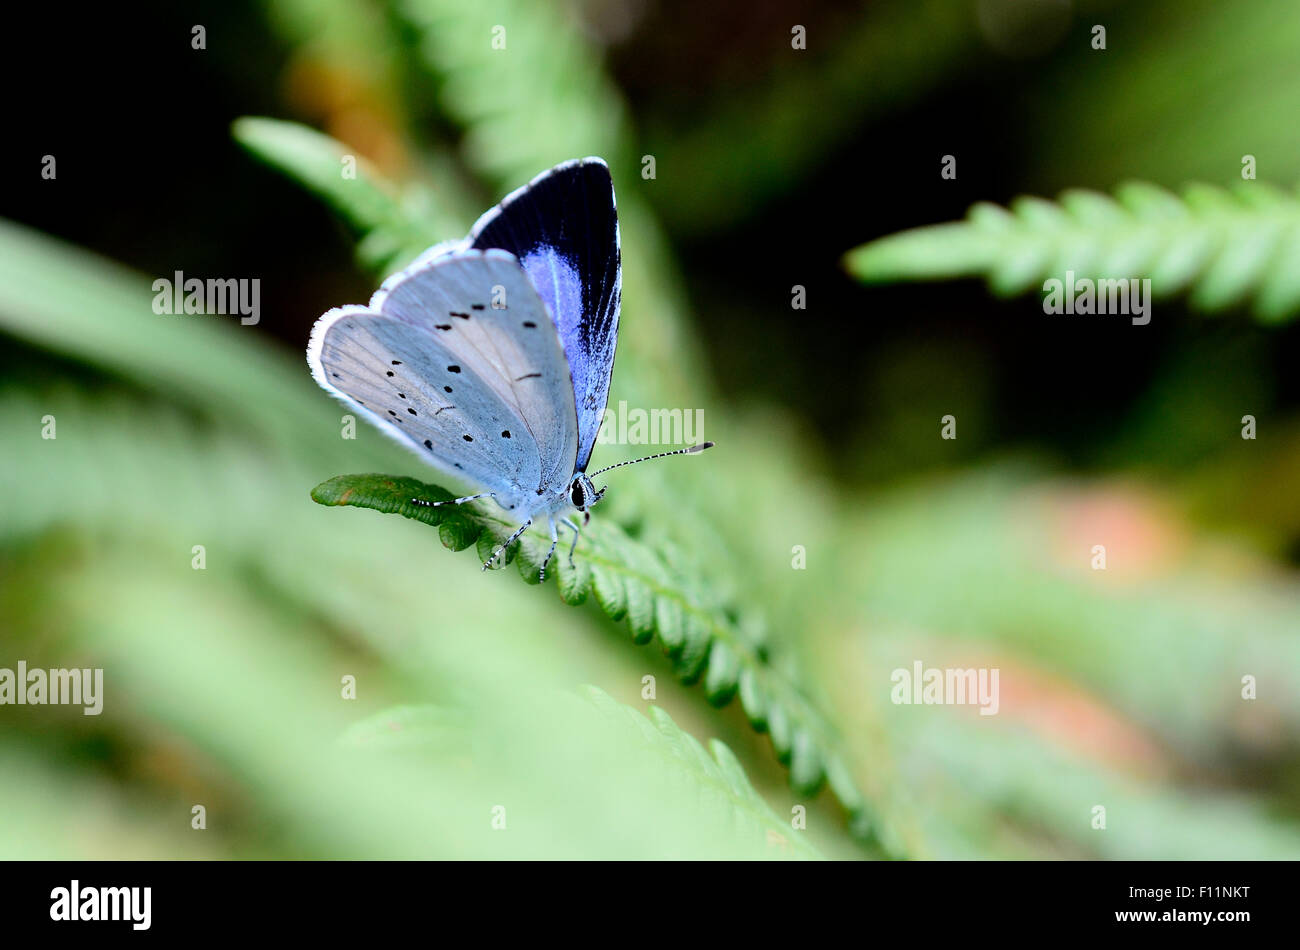 Holly mariposa azul sobre una hoja verde Dorset UK Foto de stock